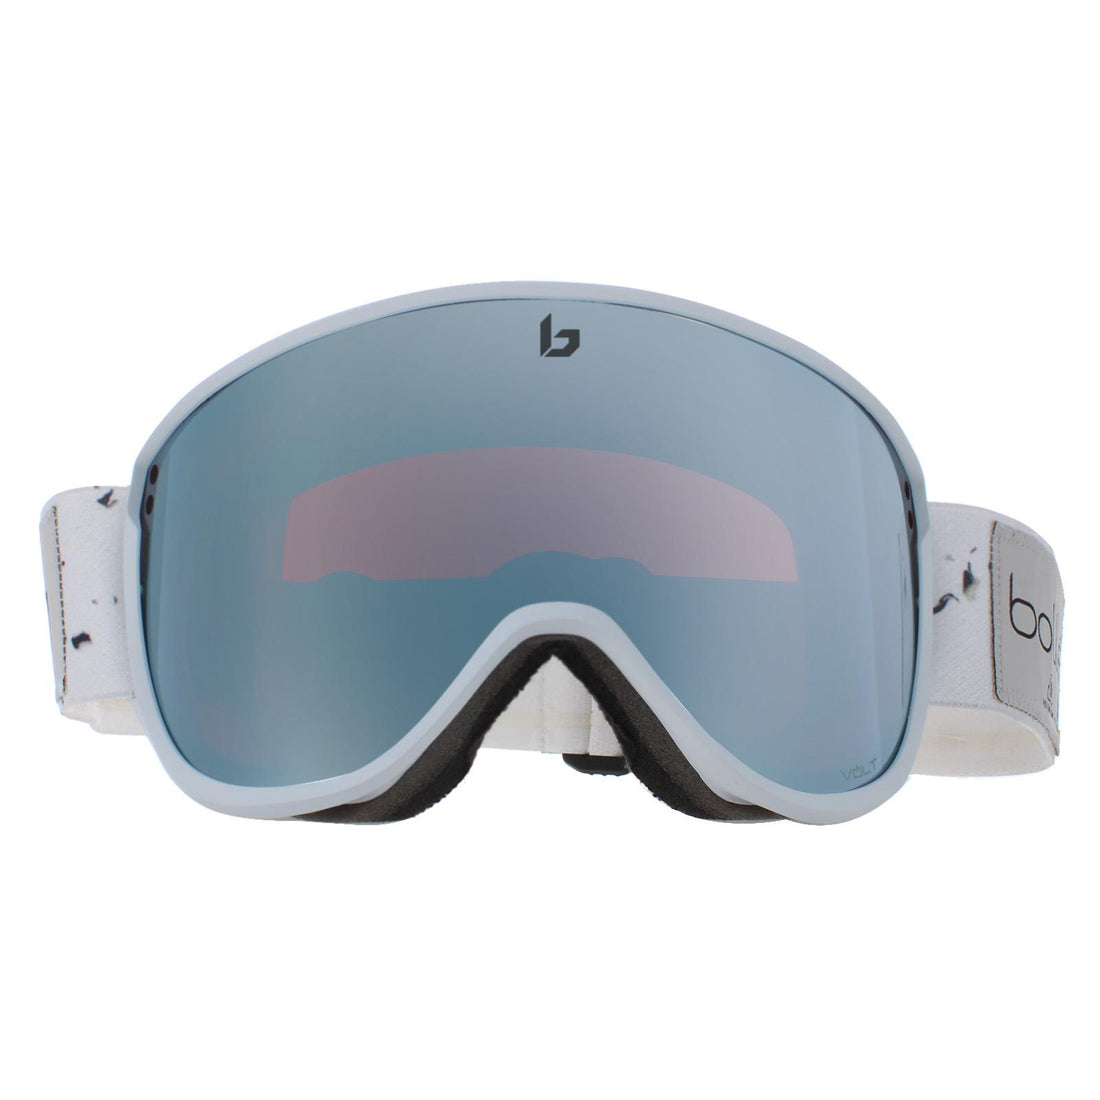 Bolle Eco Blanca Ski Goggles Matte Ice WhiteVolt Ice Blue